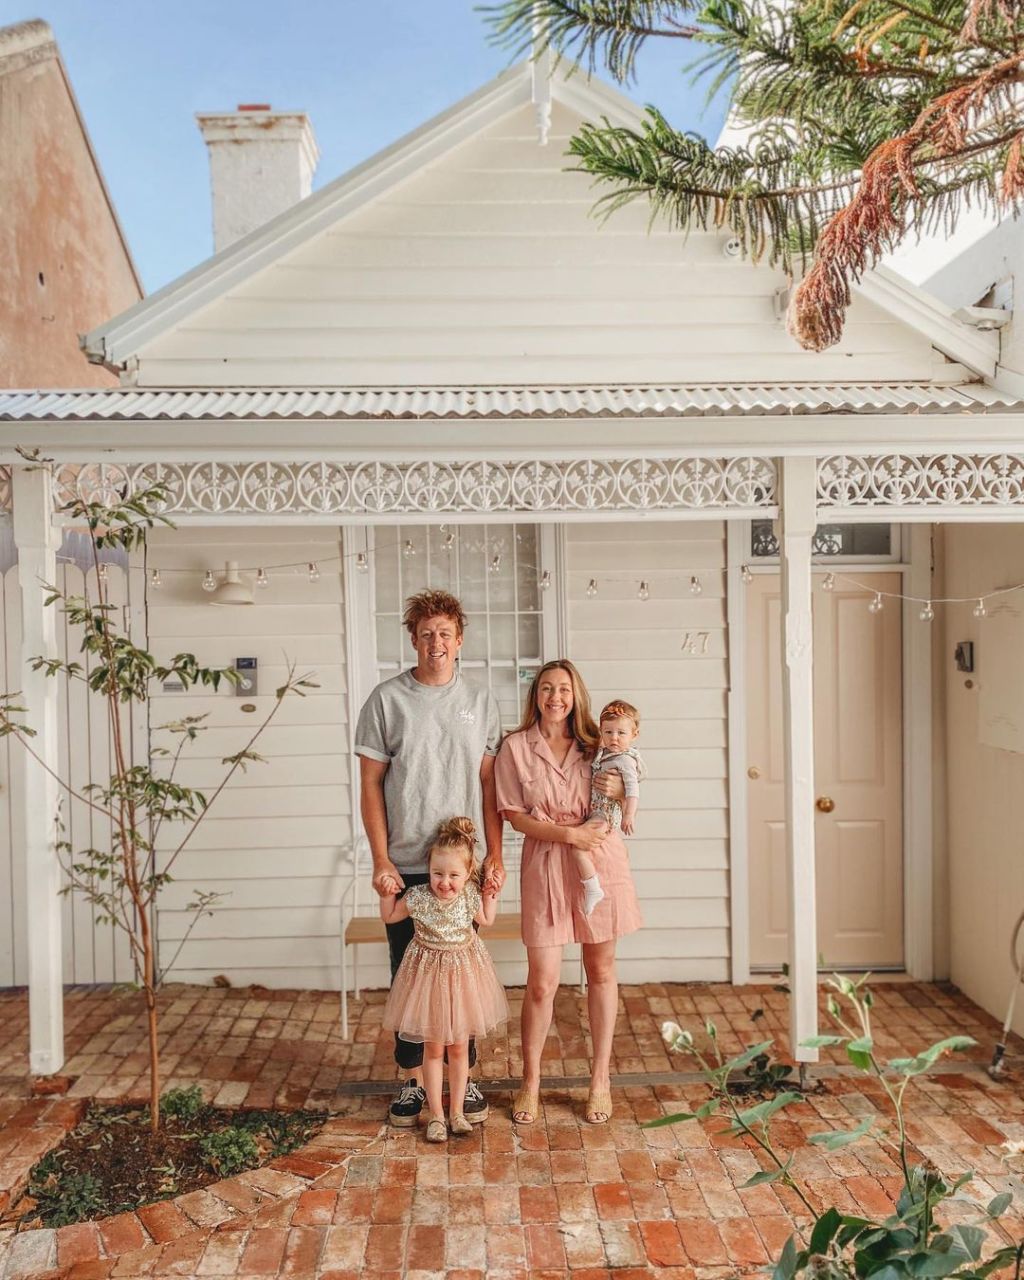 Josh and Jenna Densten with daughters Freddie and Story at their North Melbourne cottage. Photo: Instagram: @joshandjenna